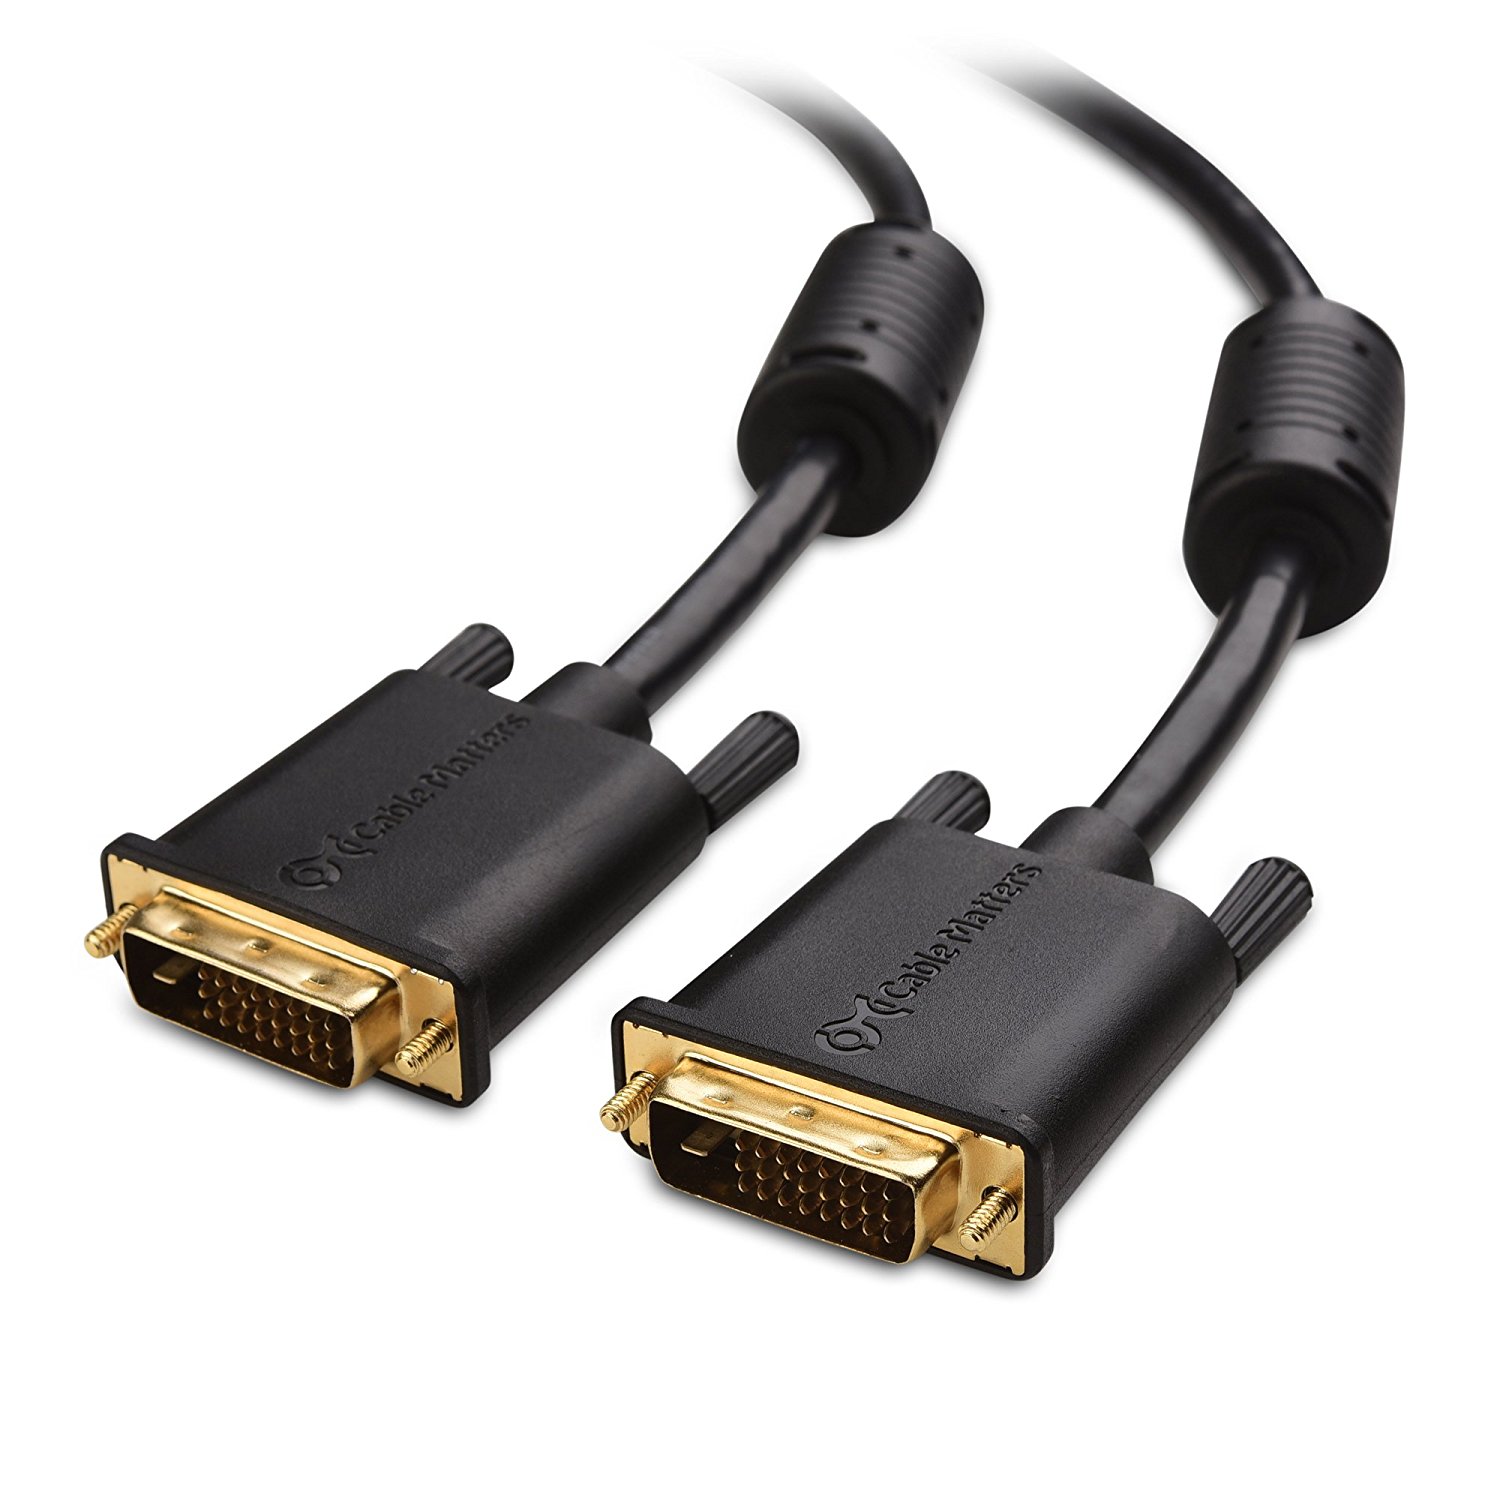 Amazon.com: Cable Matters DVI to DVI Cable (DVI Dual Link Cable/DVI ...